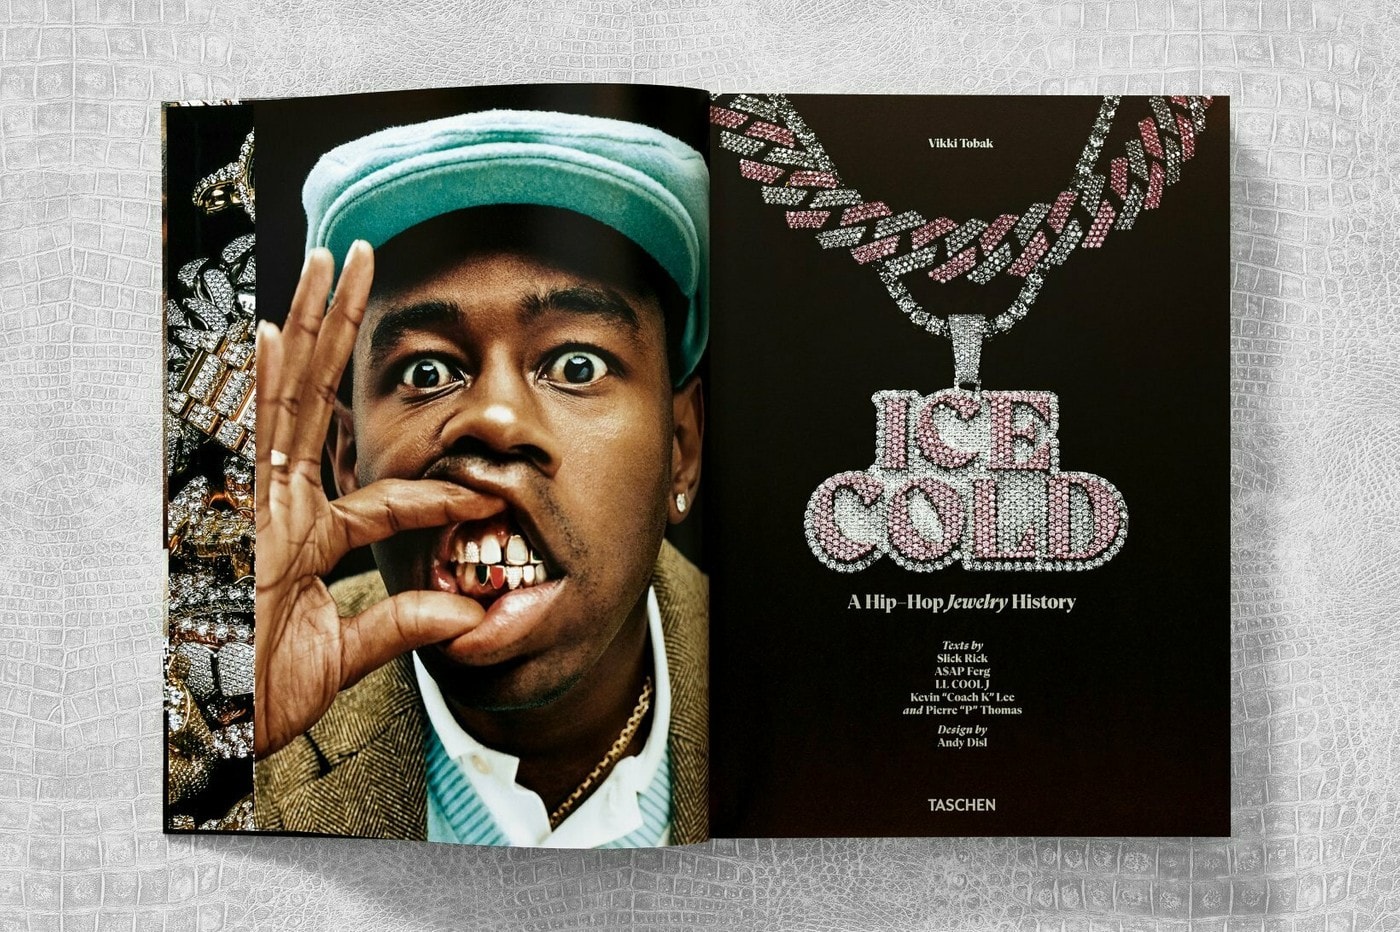 TASCHEN 重磅新書《Ice Cold: A Hip-Hop Jewelry History》正式登場